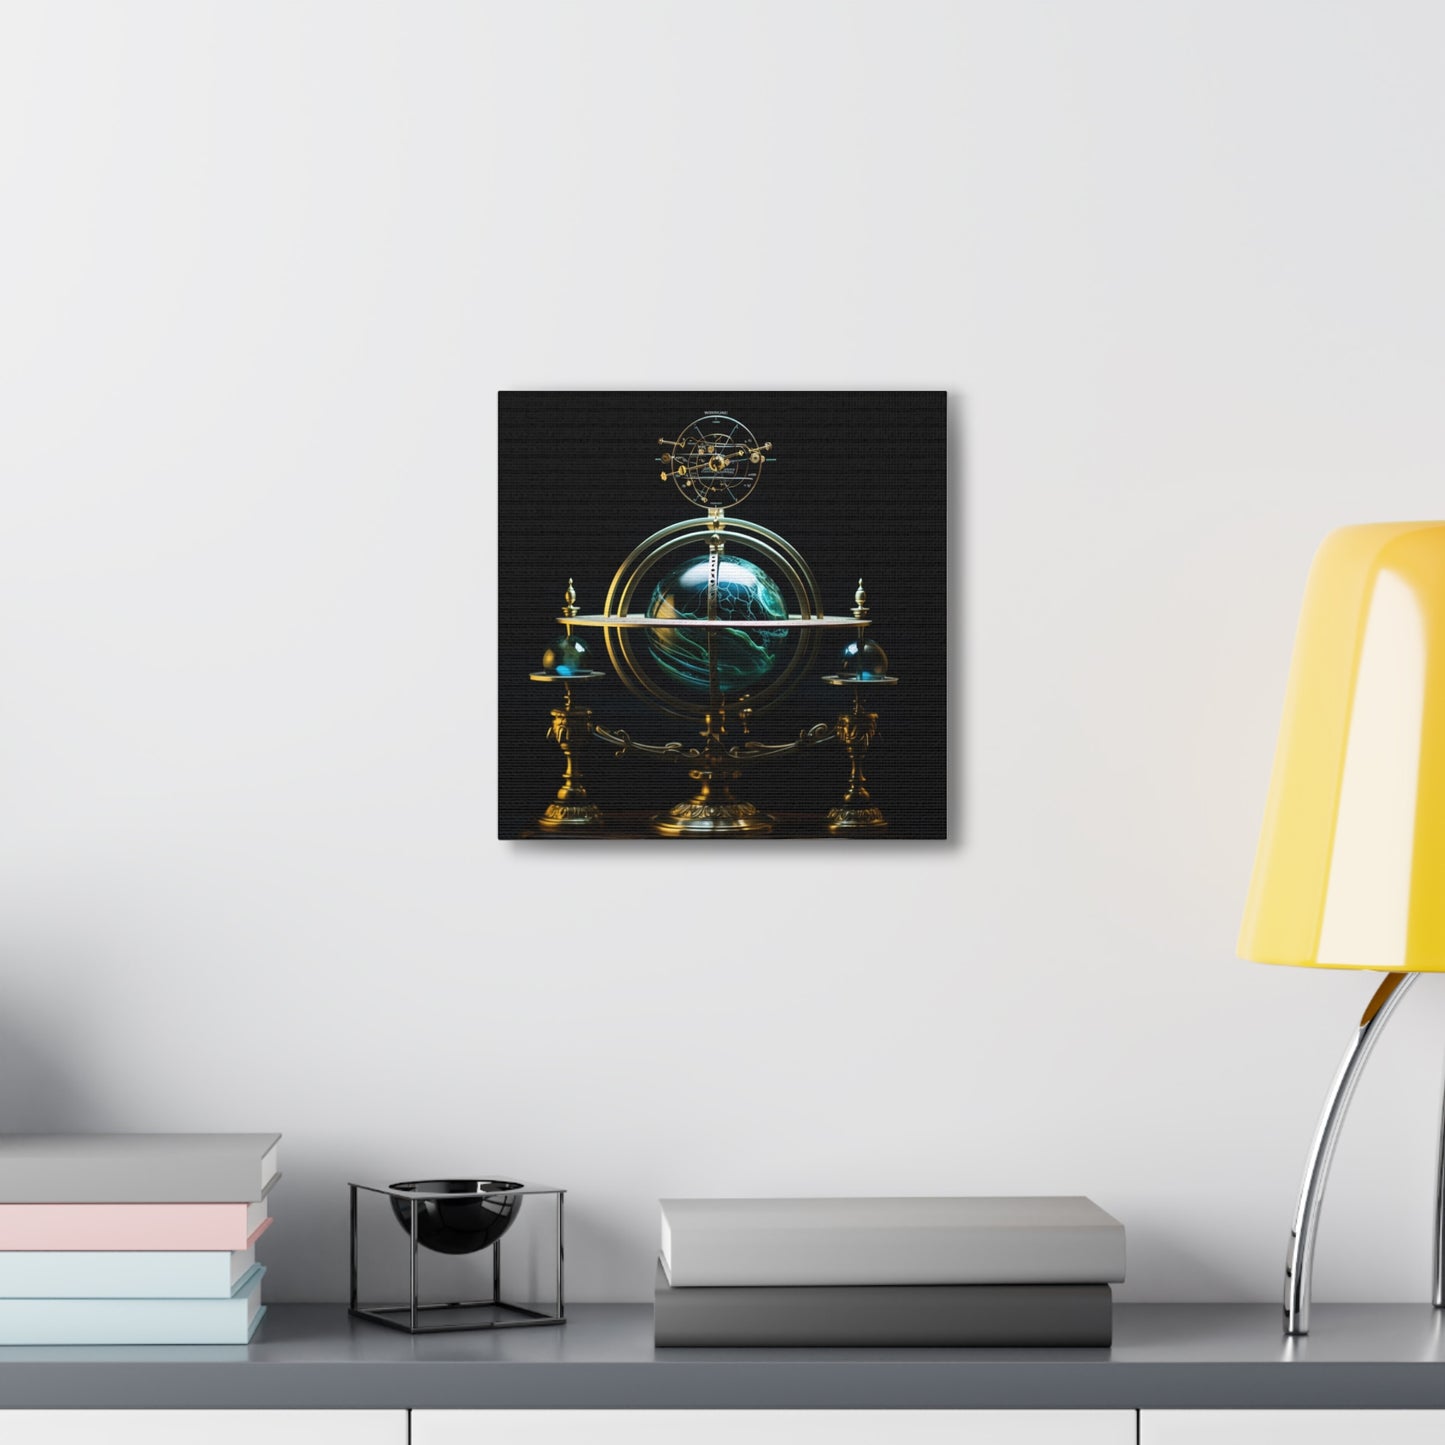 Mystical Globe Planetary Clock Wall Art Canvas Spiritual Decor